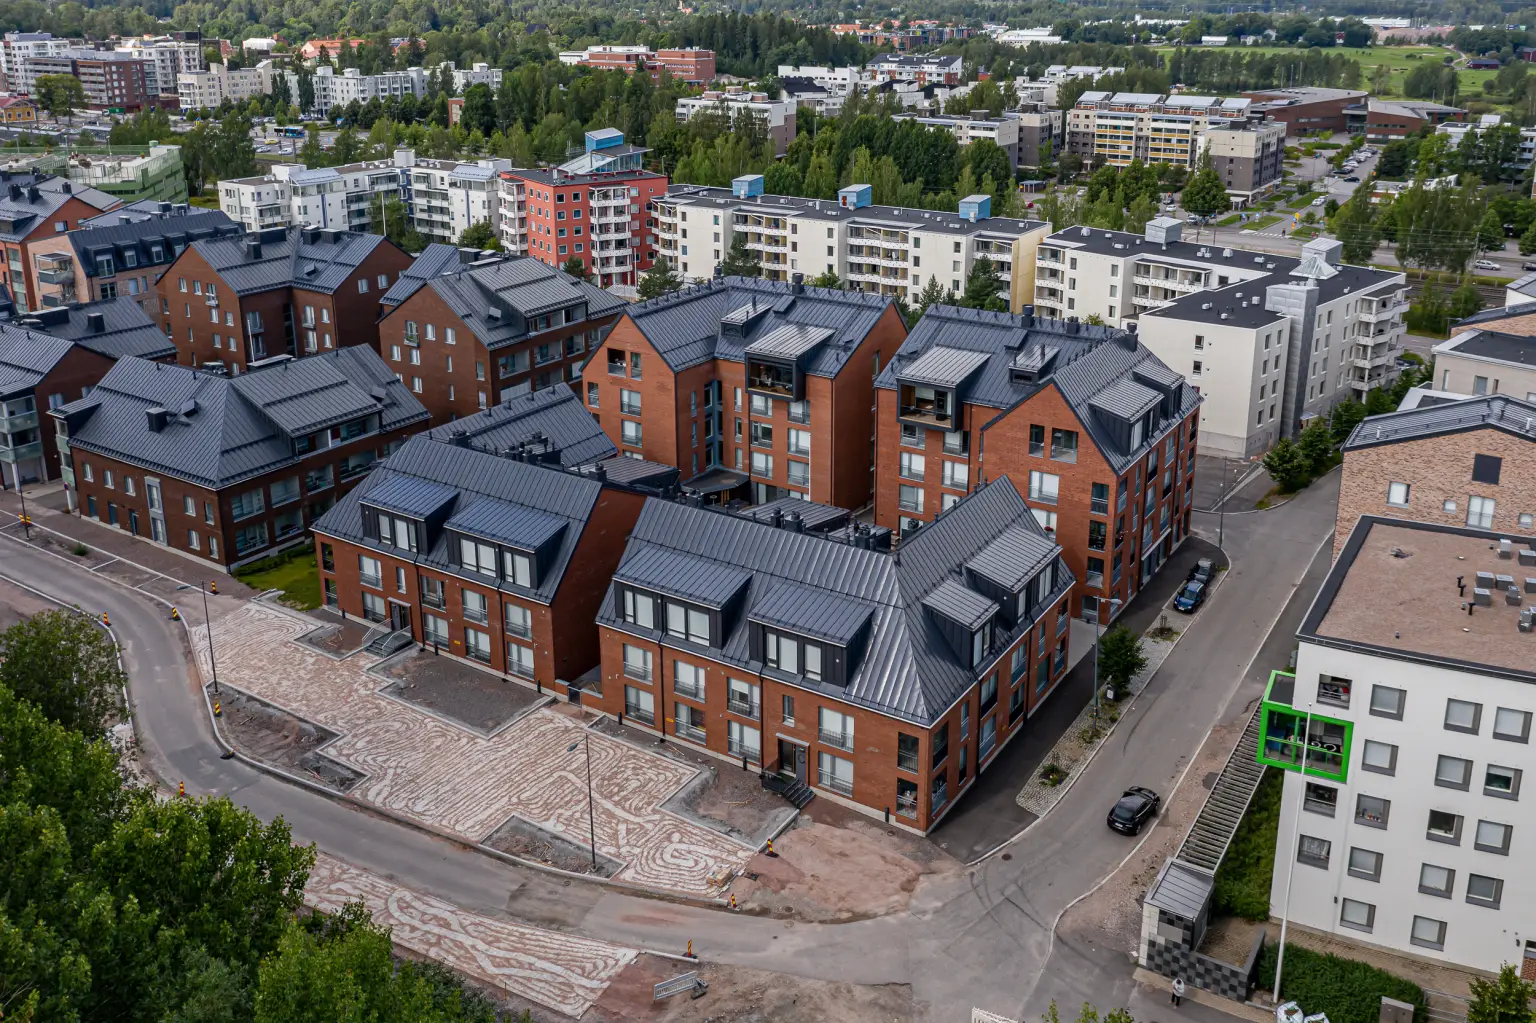 Vuokra-asunnot Espoossa